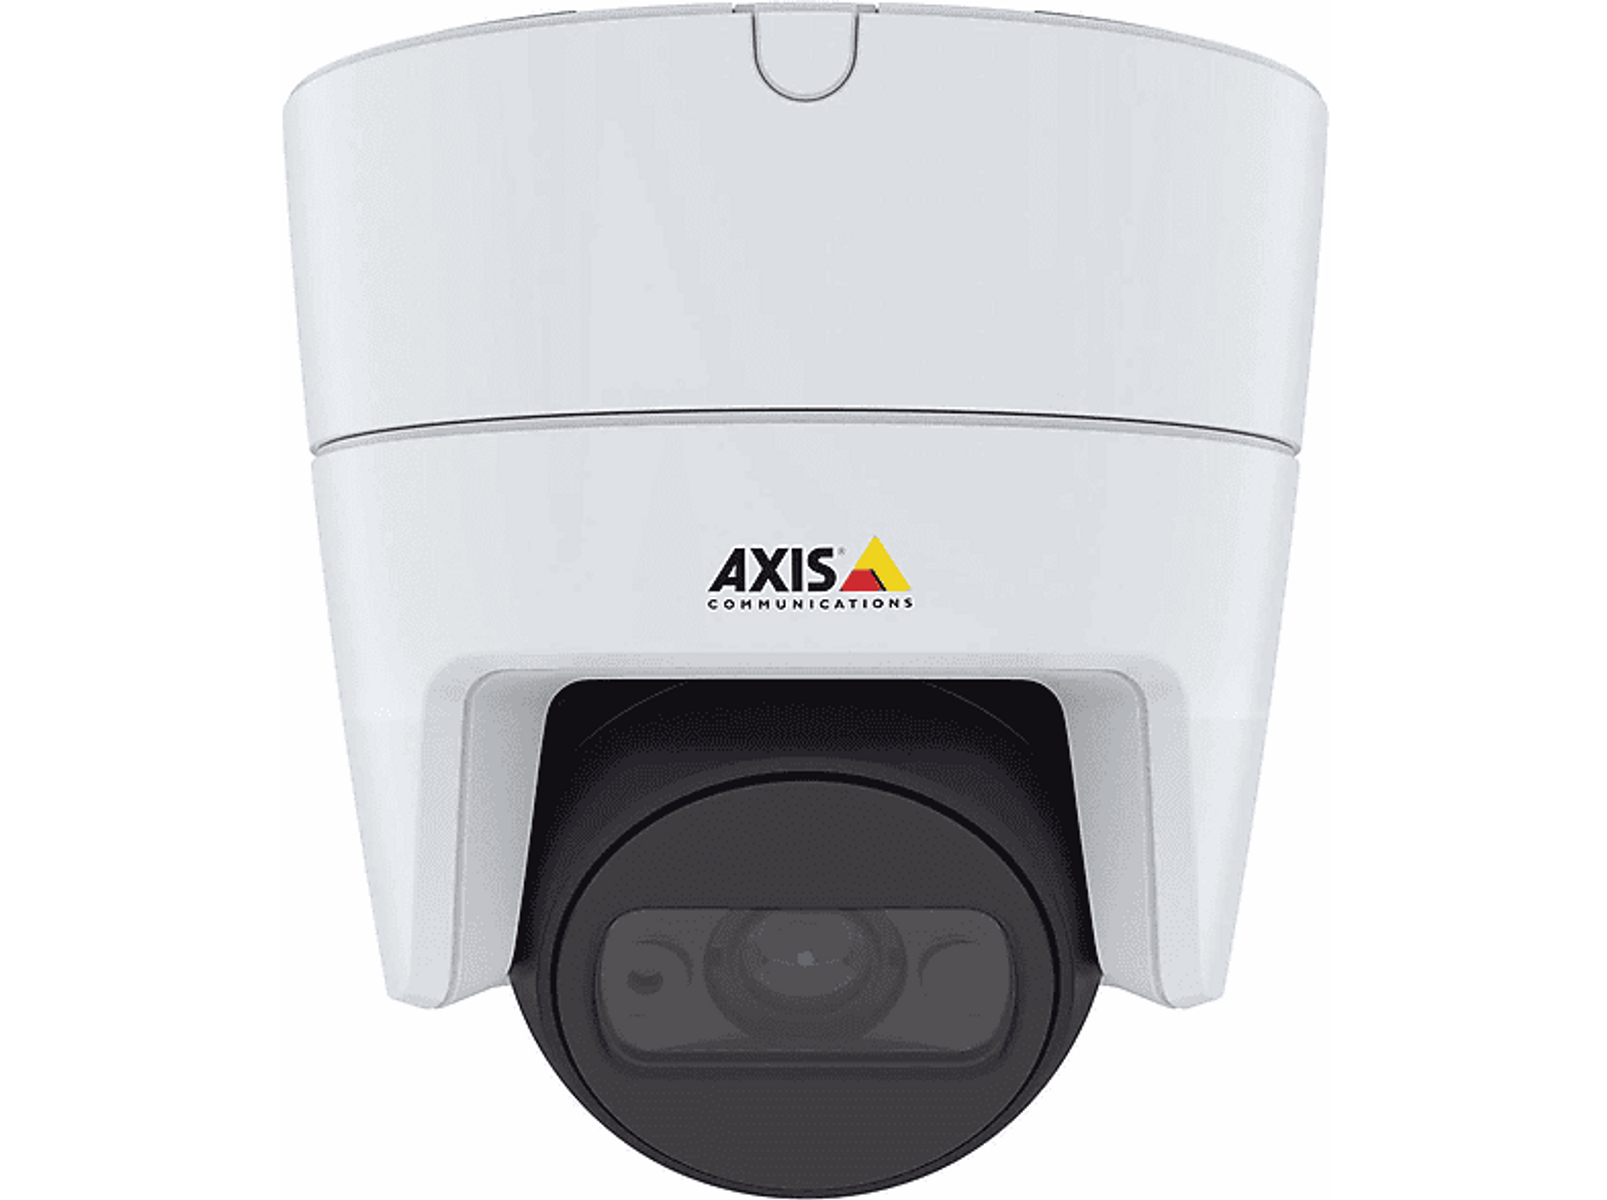 AXIS 01605-001, Netzwerkkamera, Auflösung Video: 1512 x 2688